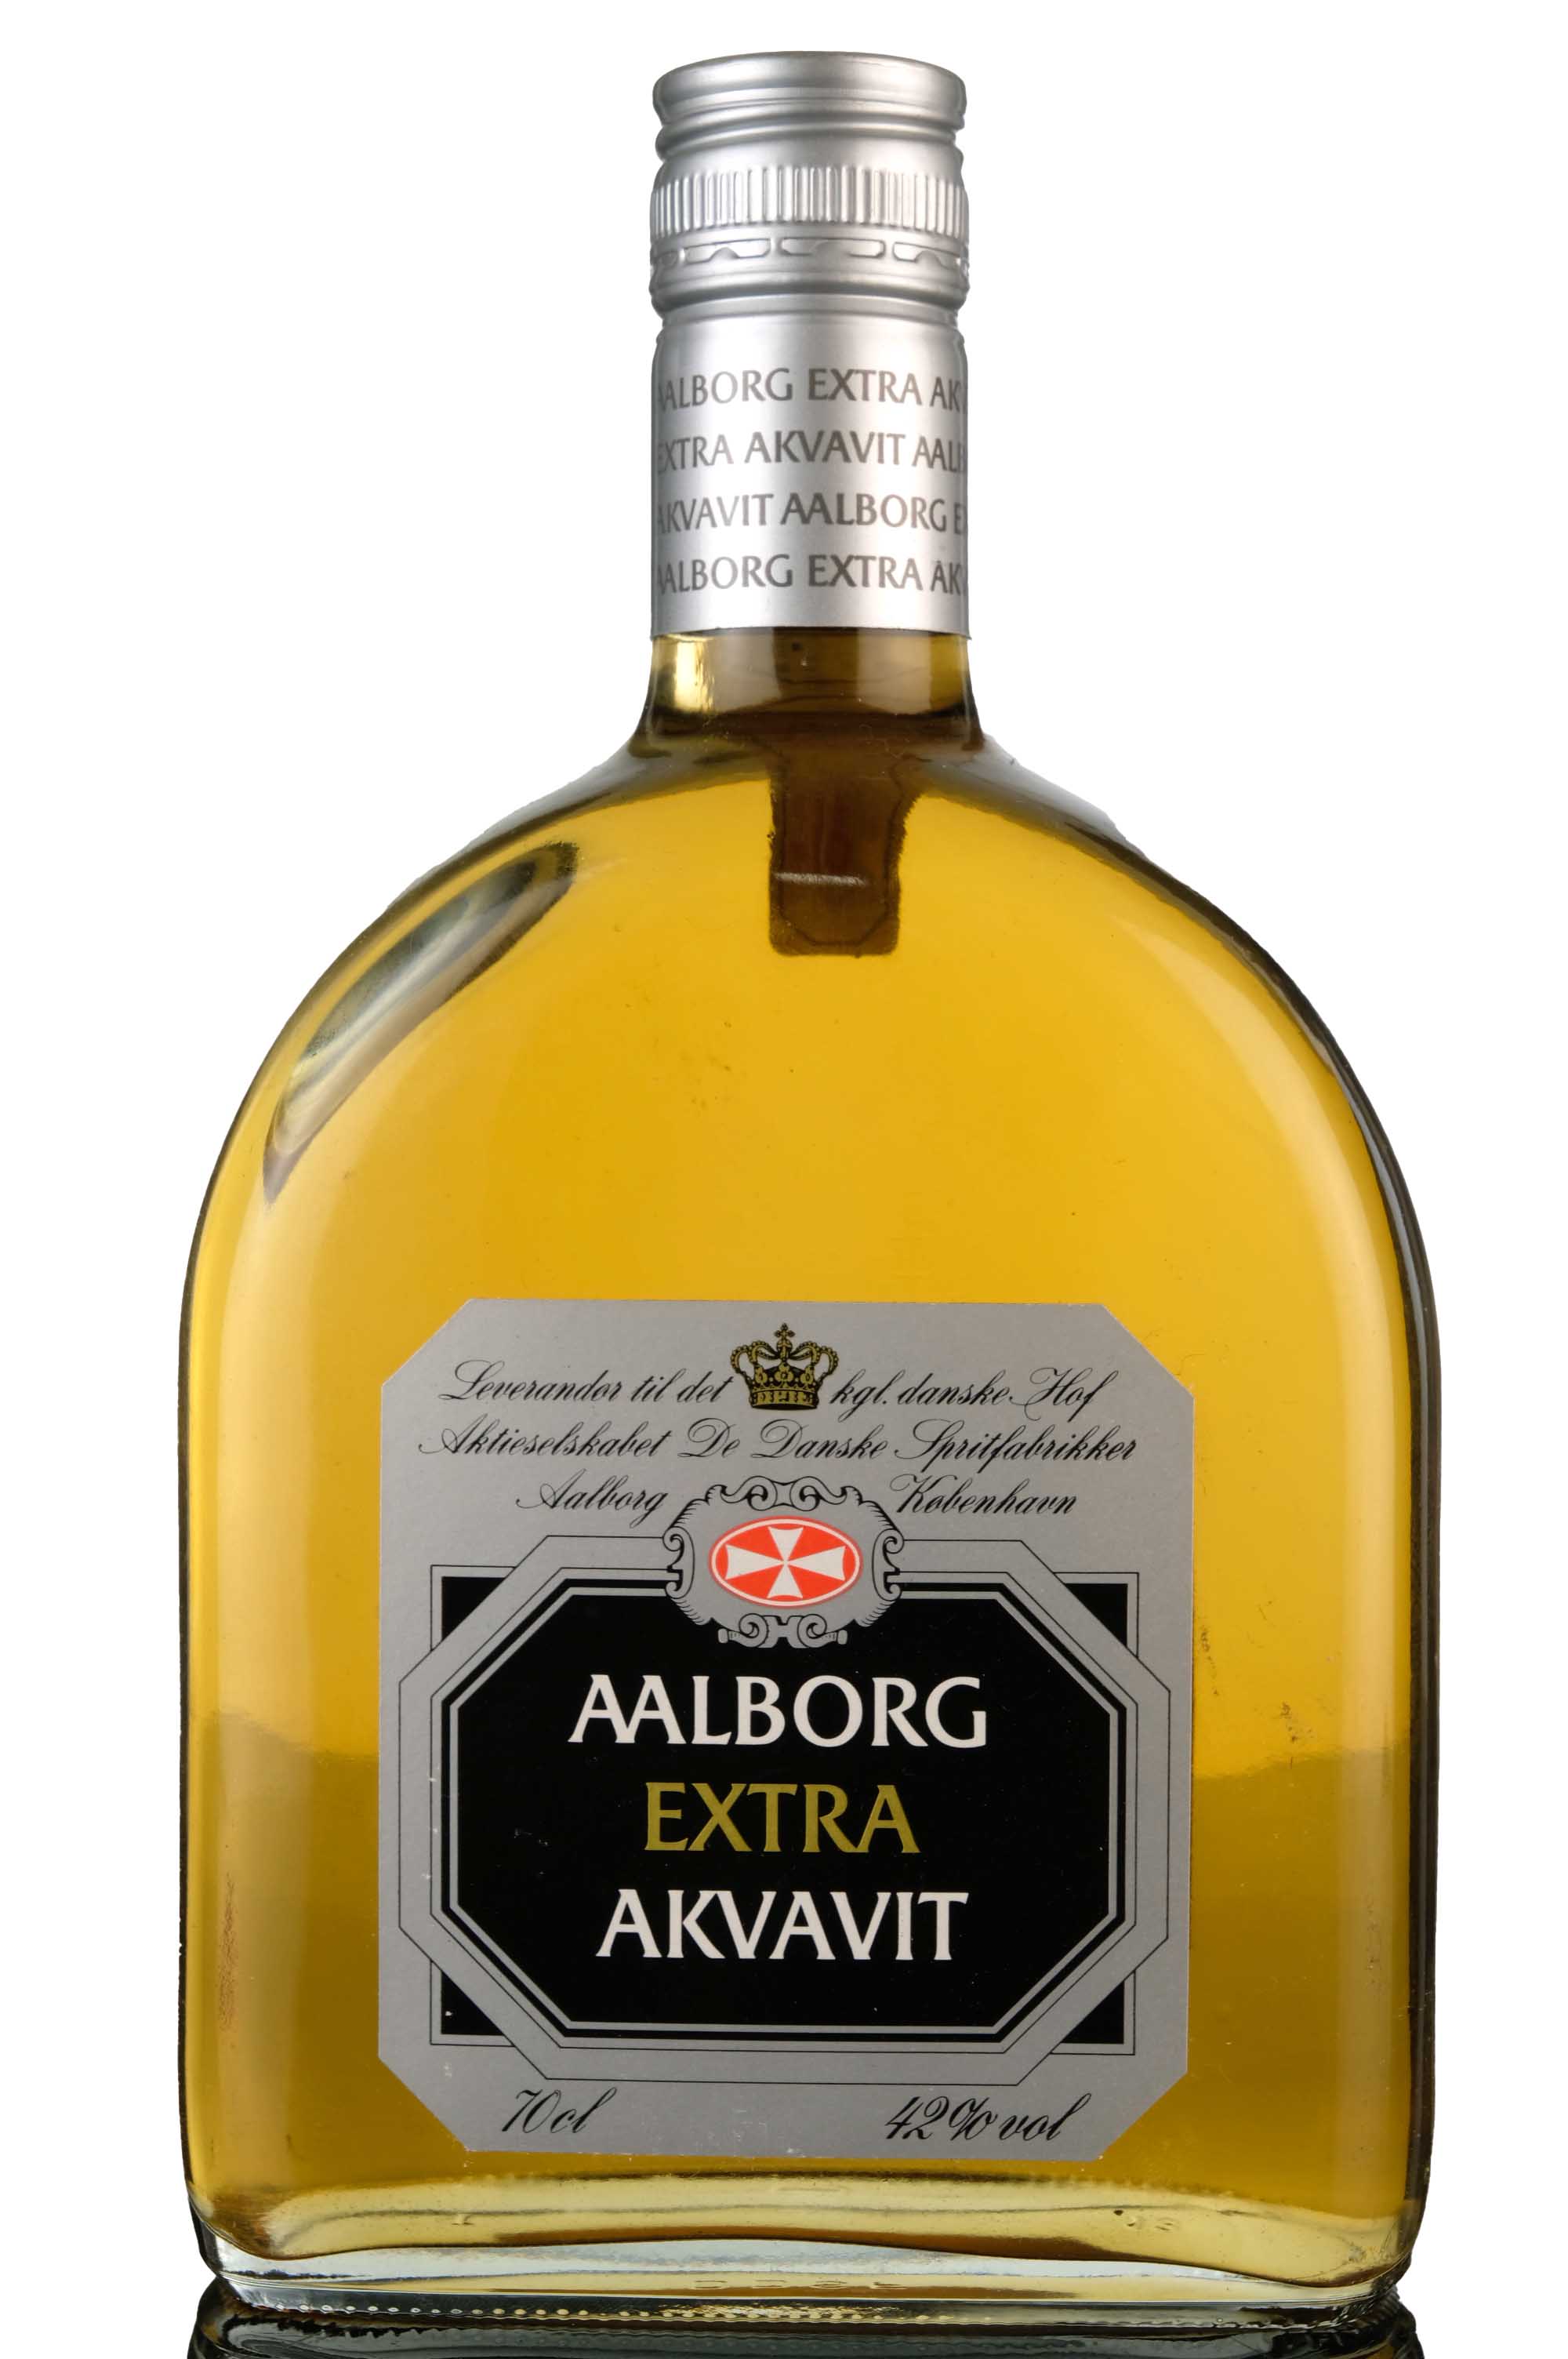 Aalborg Extra Akvavit